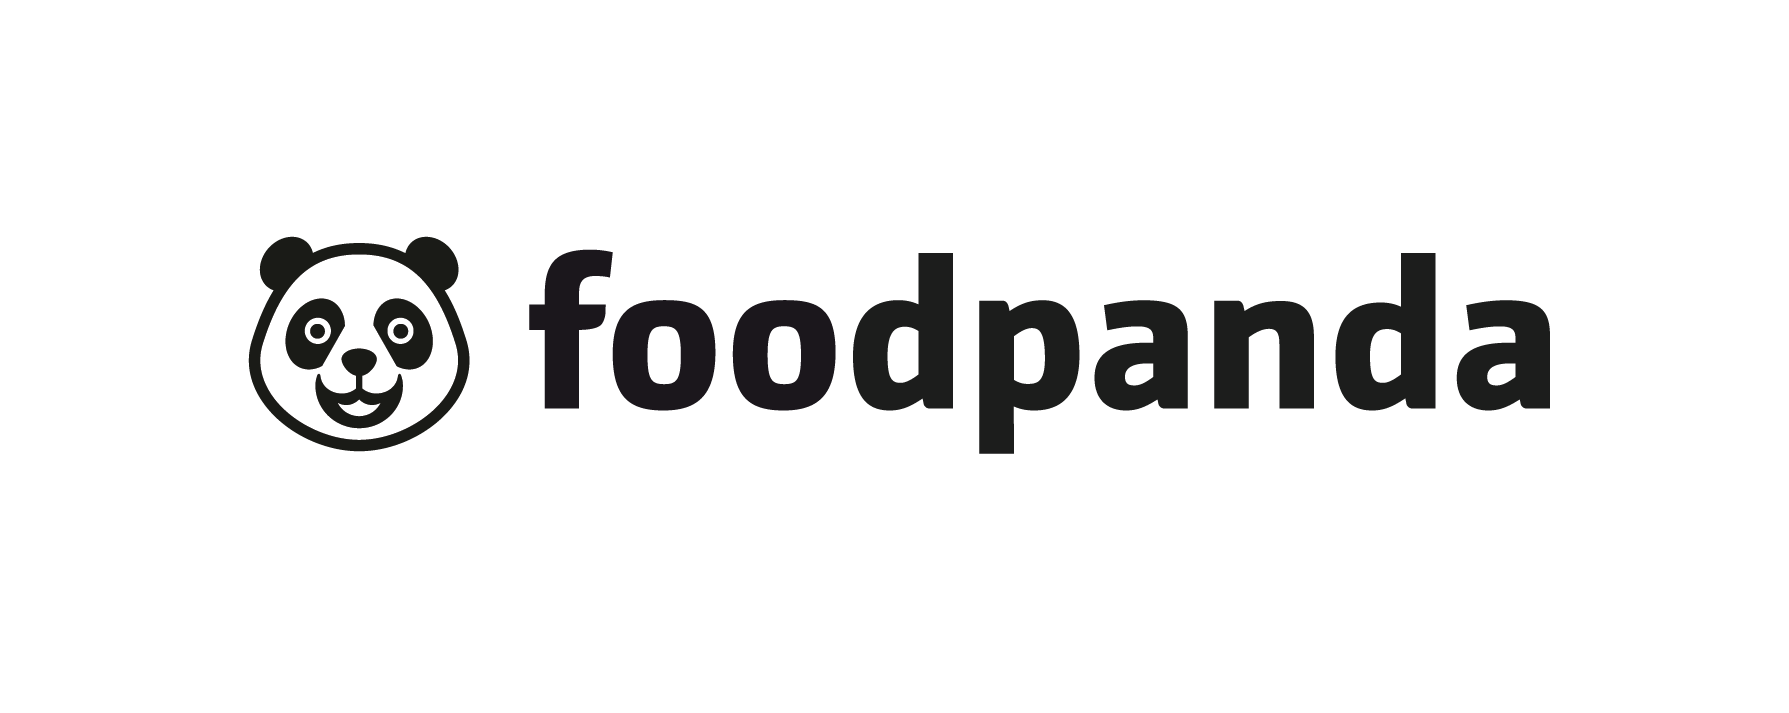 foodpanda Logo - Foodpanda-Logo : BrandHero